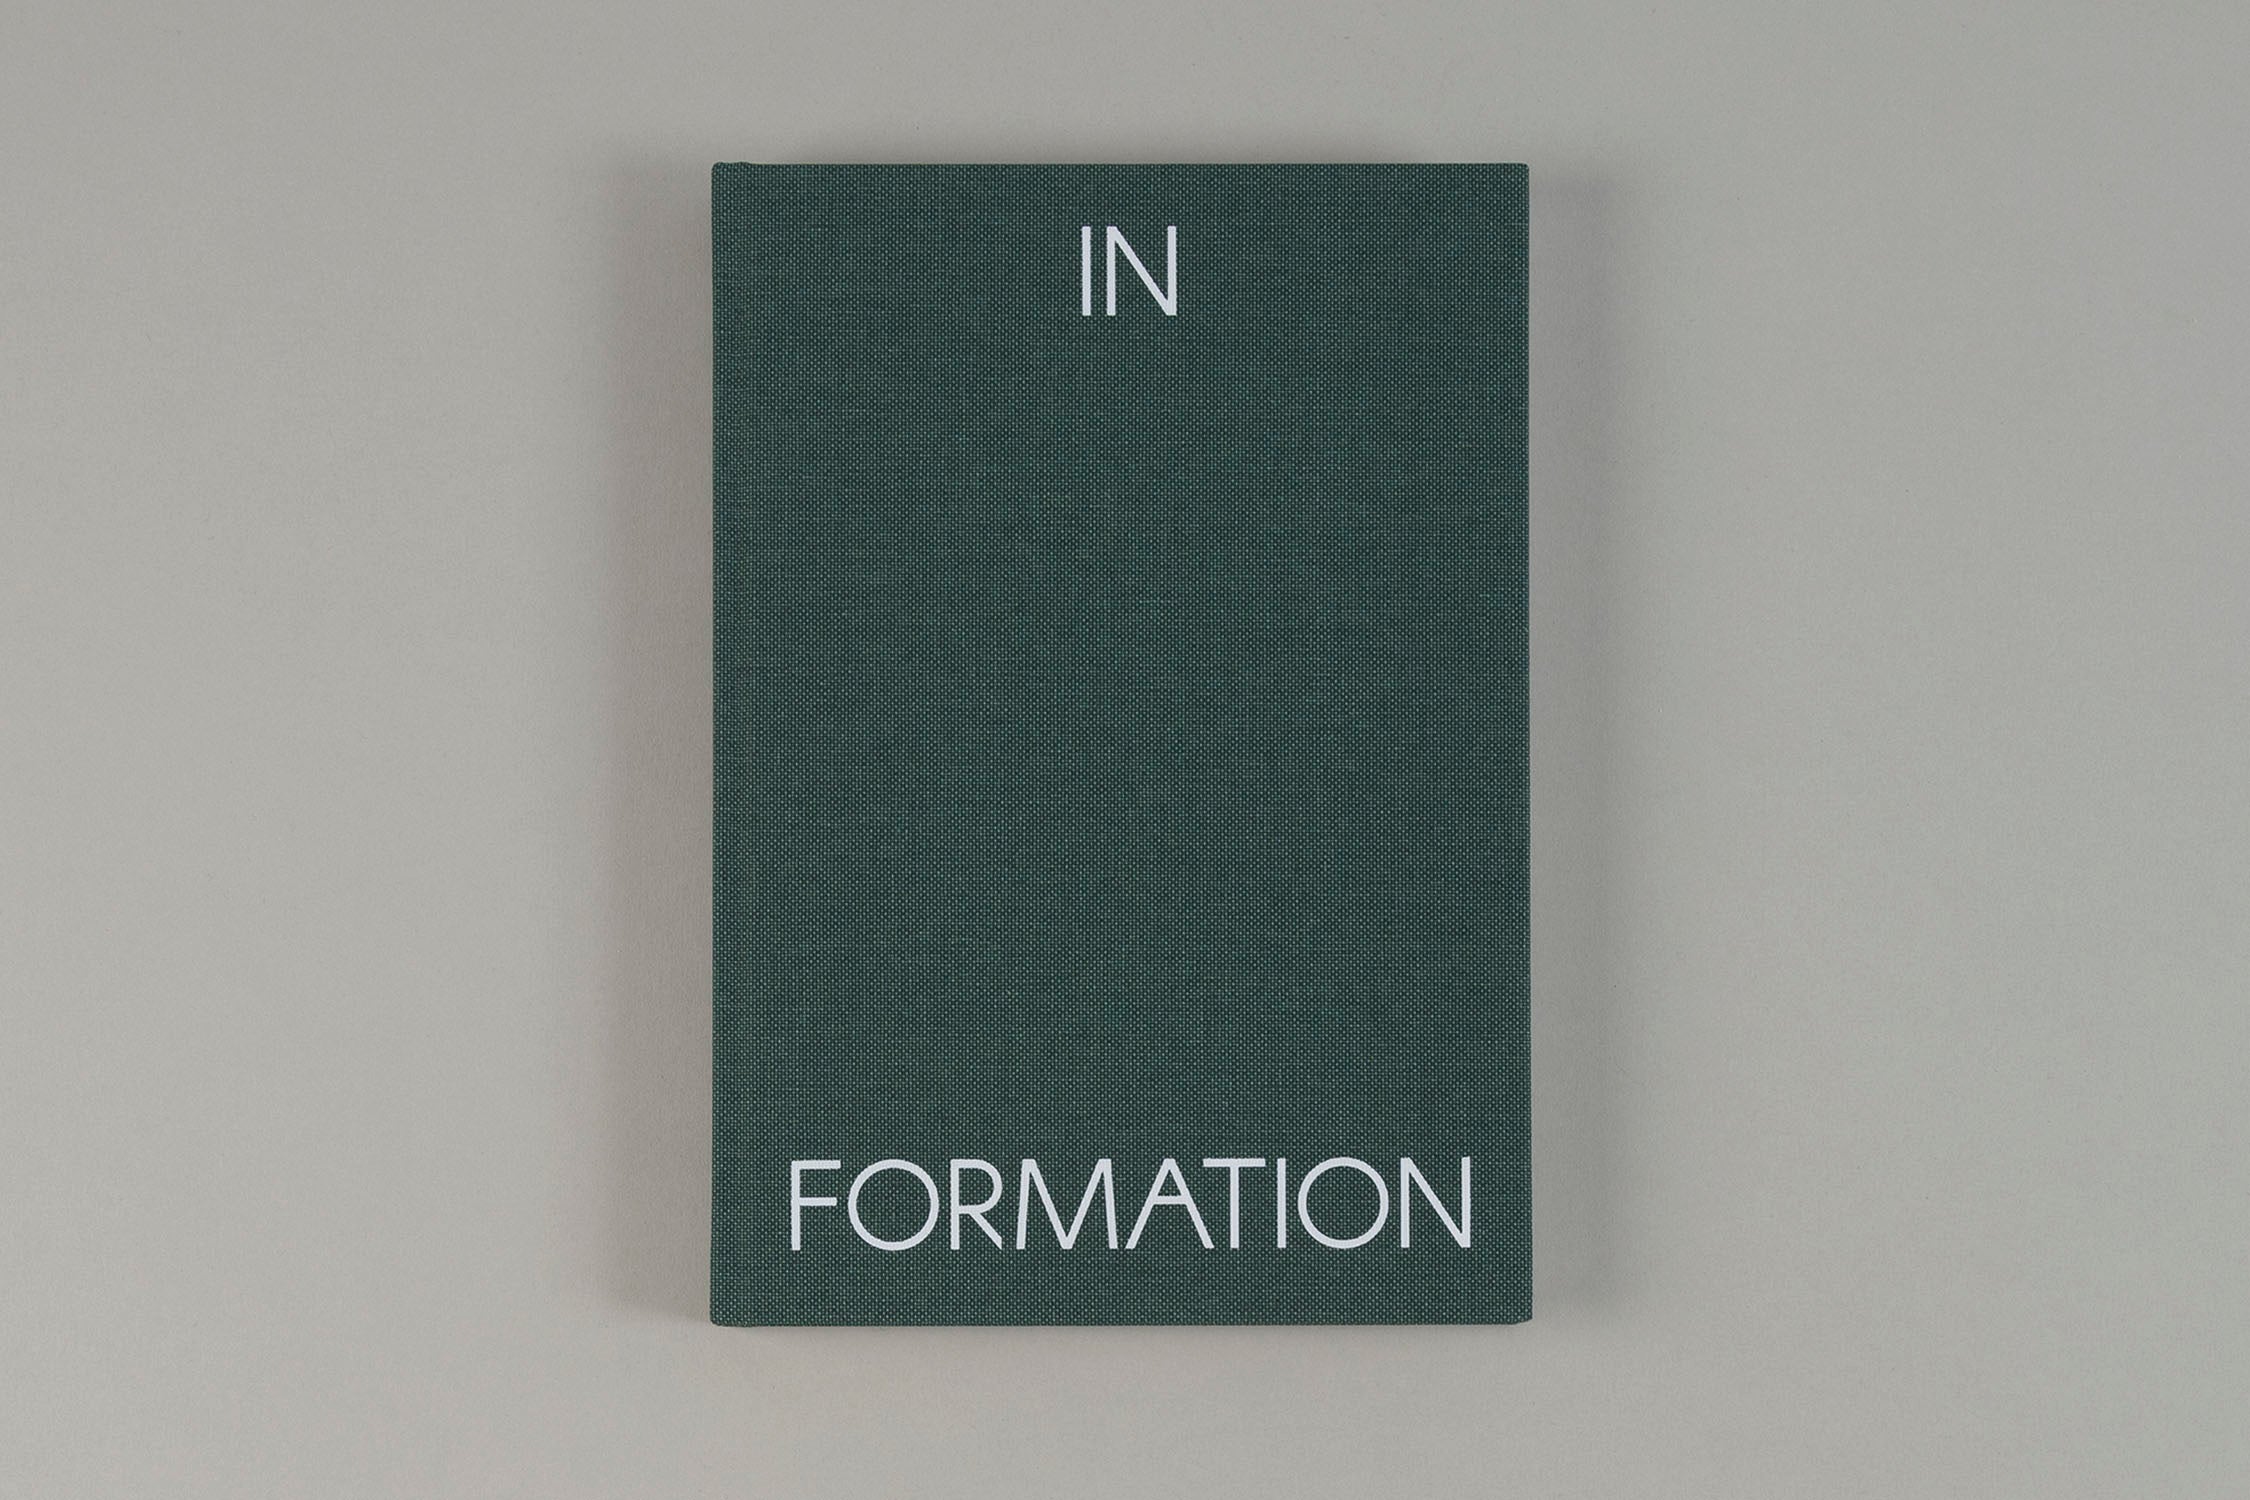 Antony Gormley ‘In Formation’ (2020)